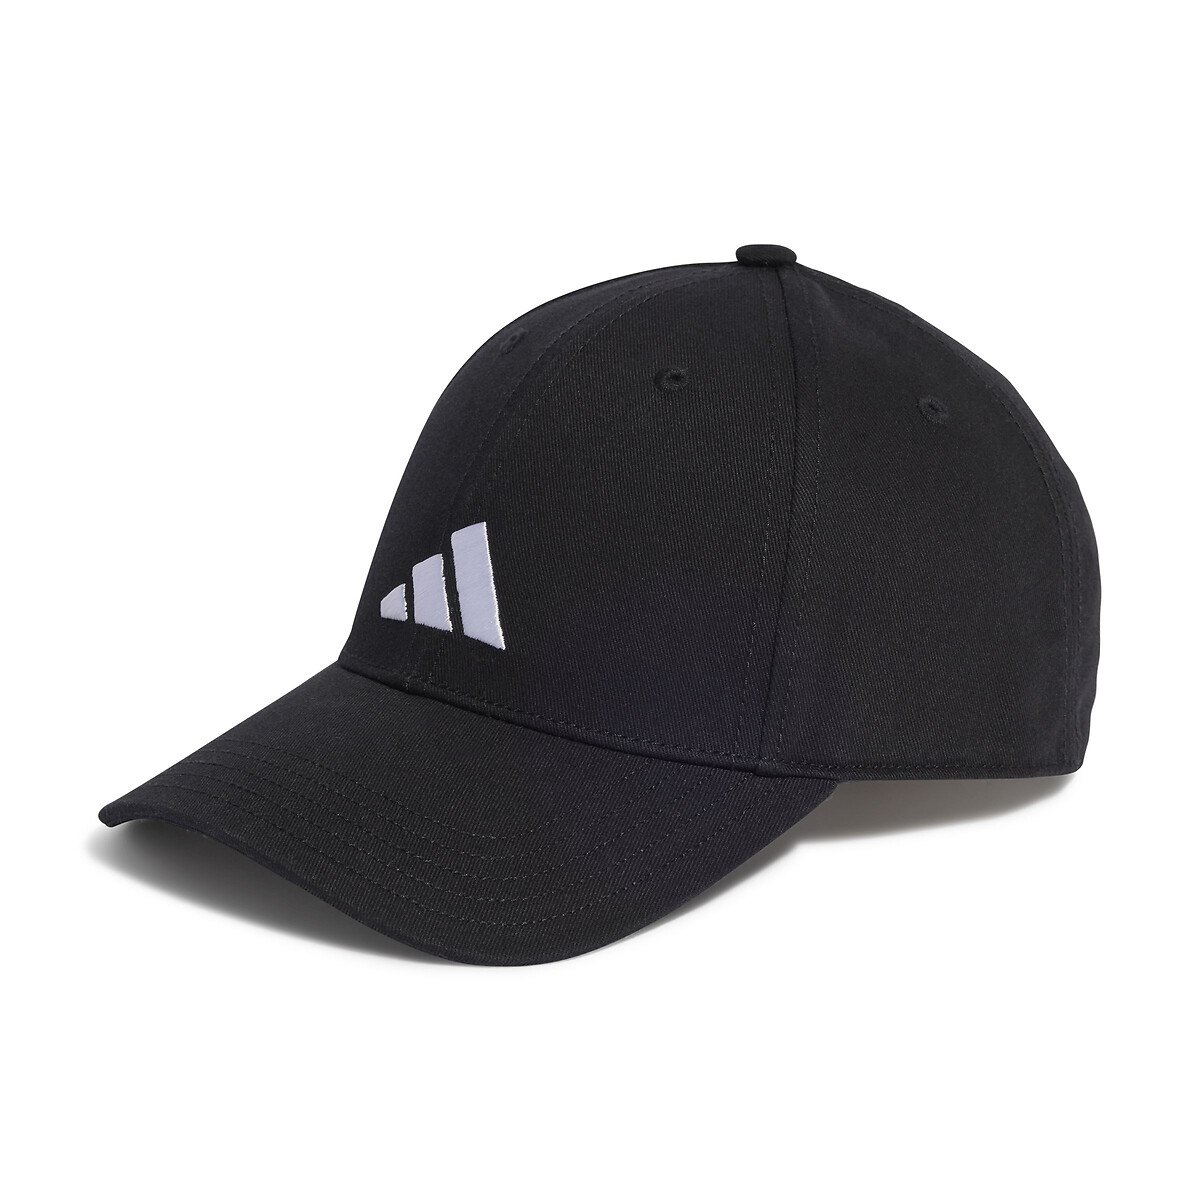 Tiro league canvas cap with embroidered logo, black, Adidas Performance ...